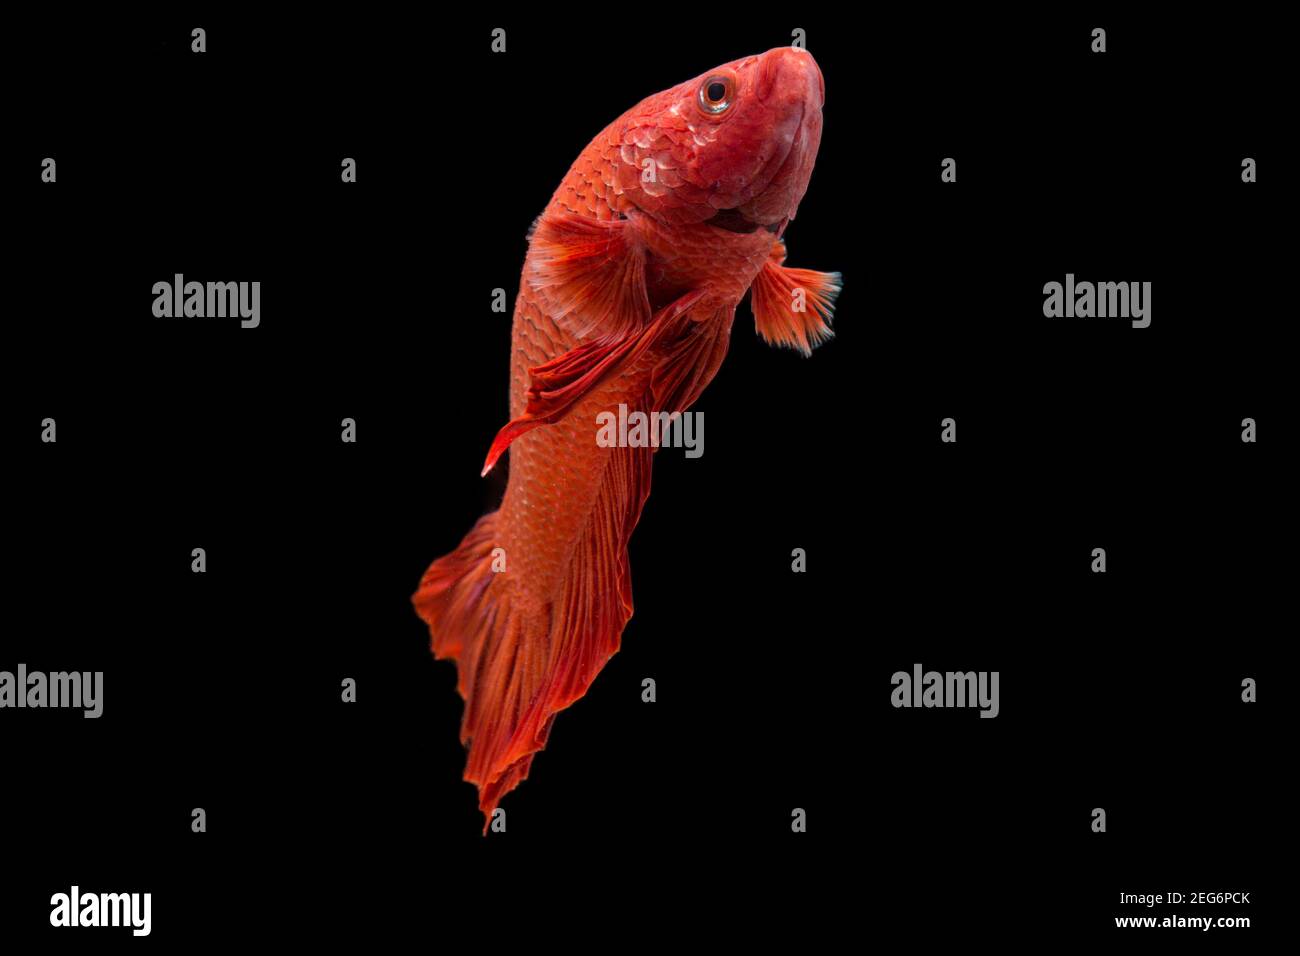 Betta fish super red Halfmoon siamnese Fighting Fish Splendens on black background Stock Photo